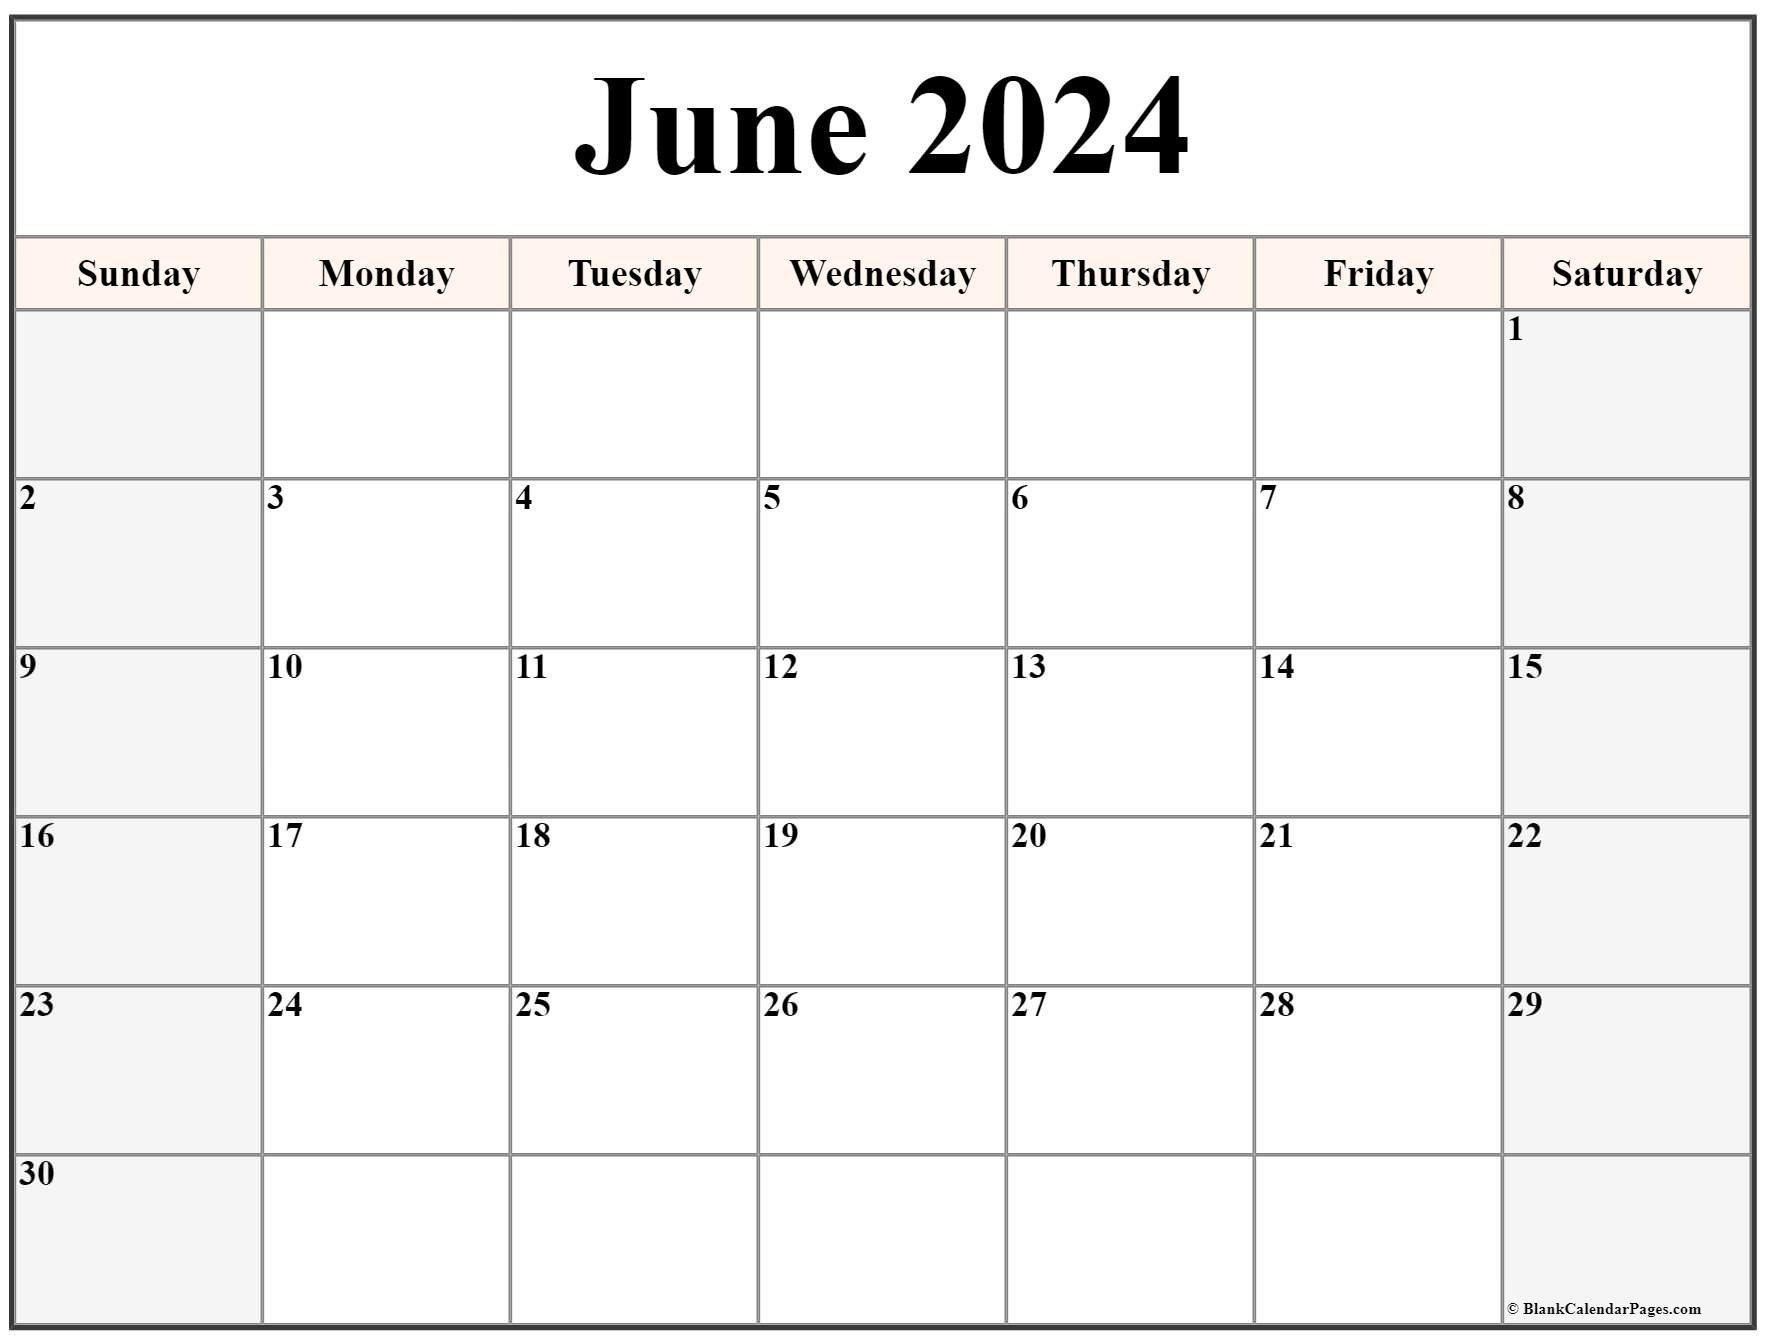 June 2024 Calendar | Free Printable Calendar with Printable Calendar June 2023 To June 2024